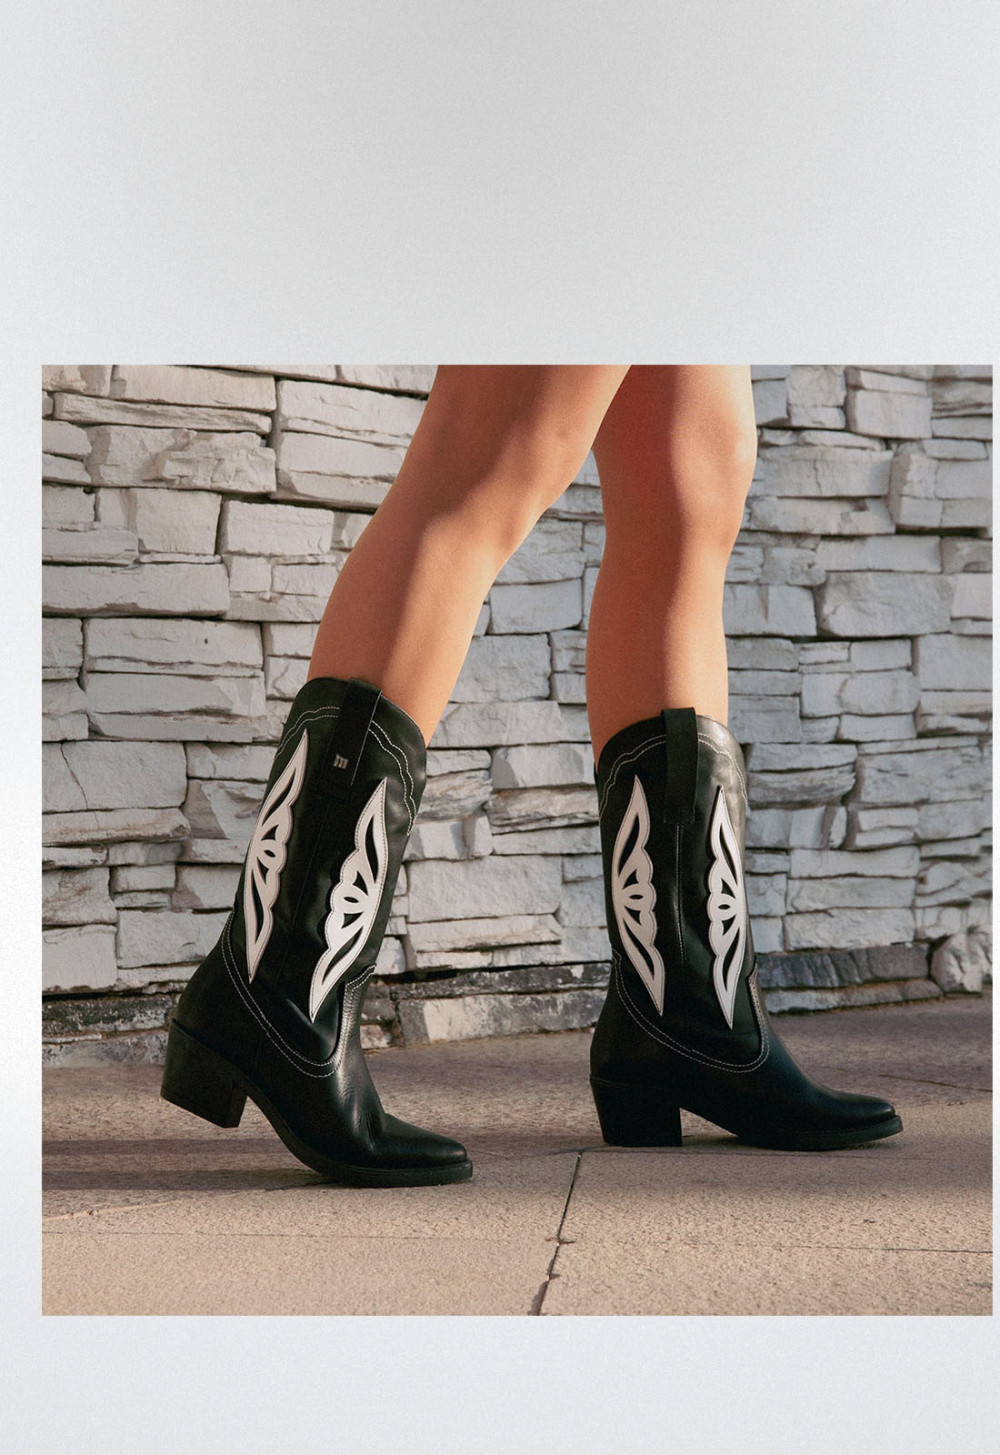 Bota Cowboy Pespuntes, Zapatos de mujer